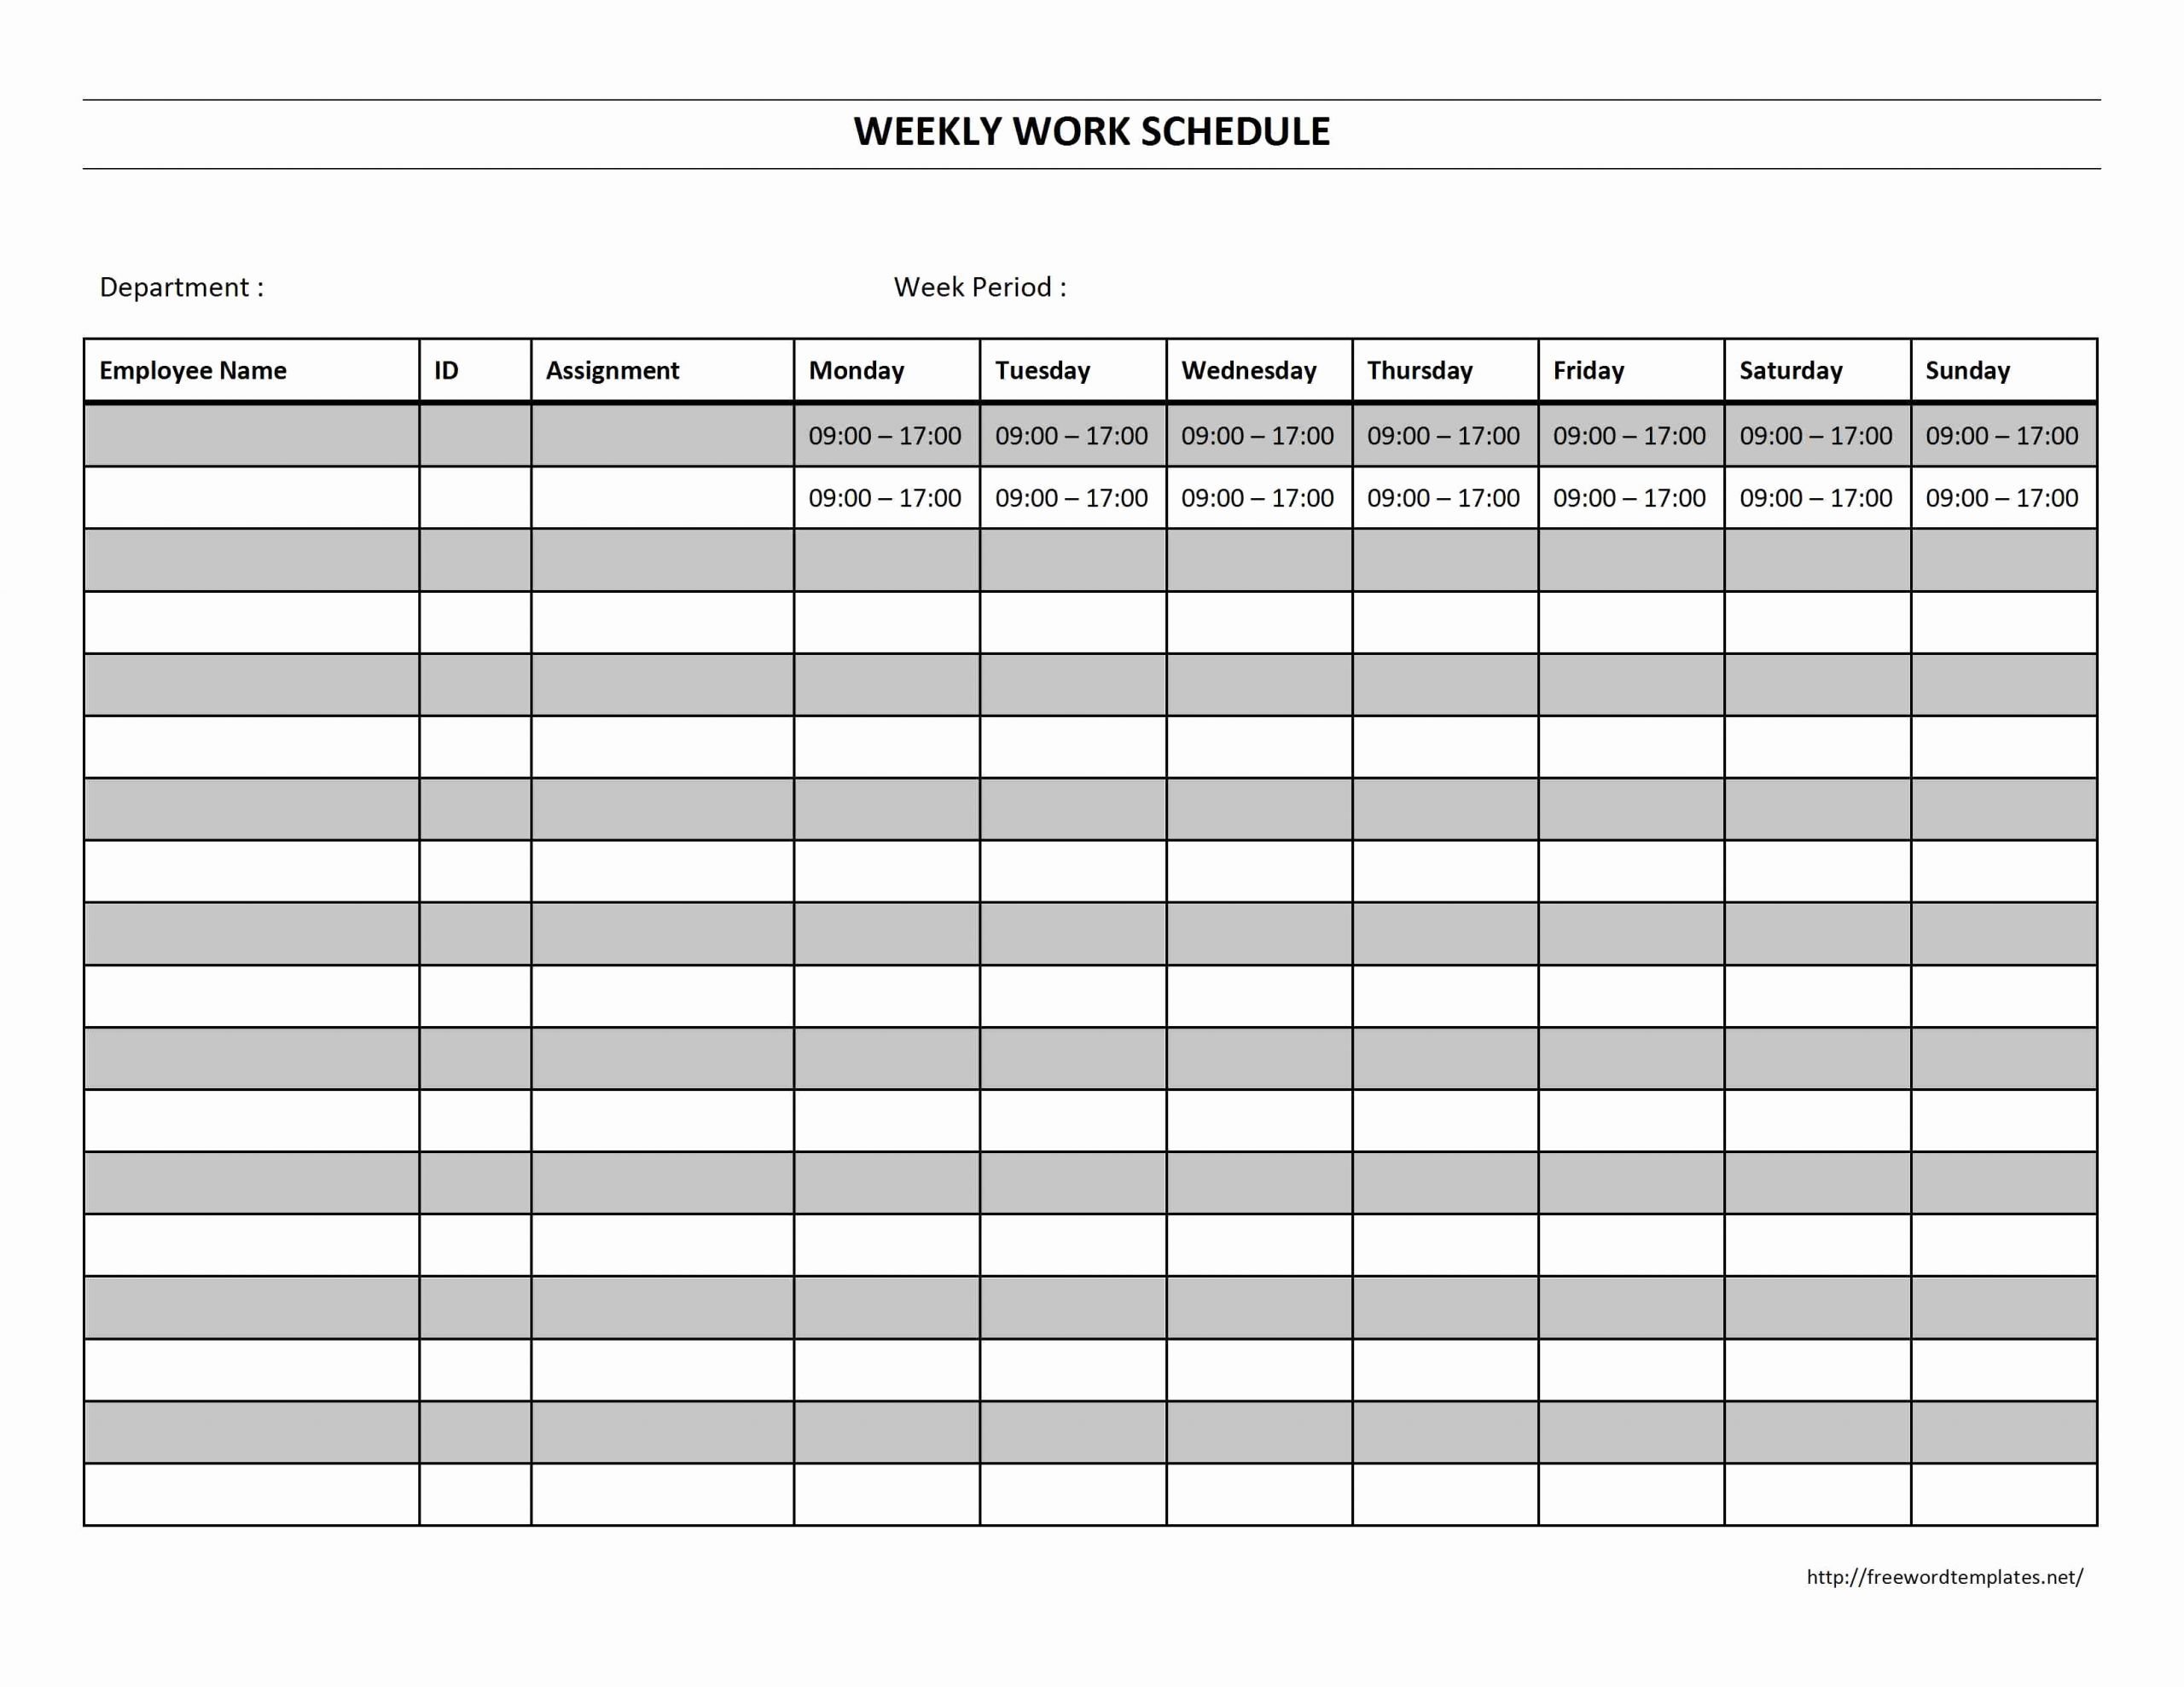 Weekly Work Schedule Template Free Lovely Weekly Work Schedule